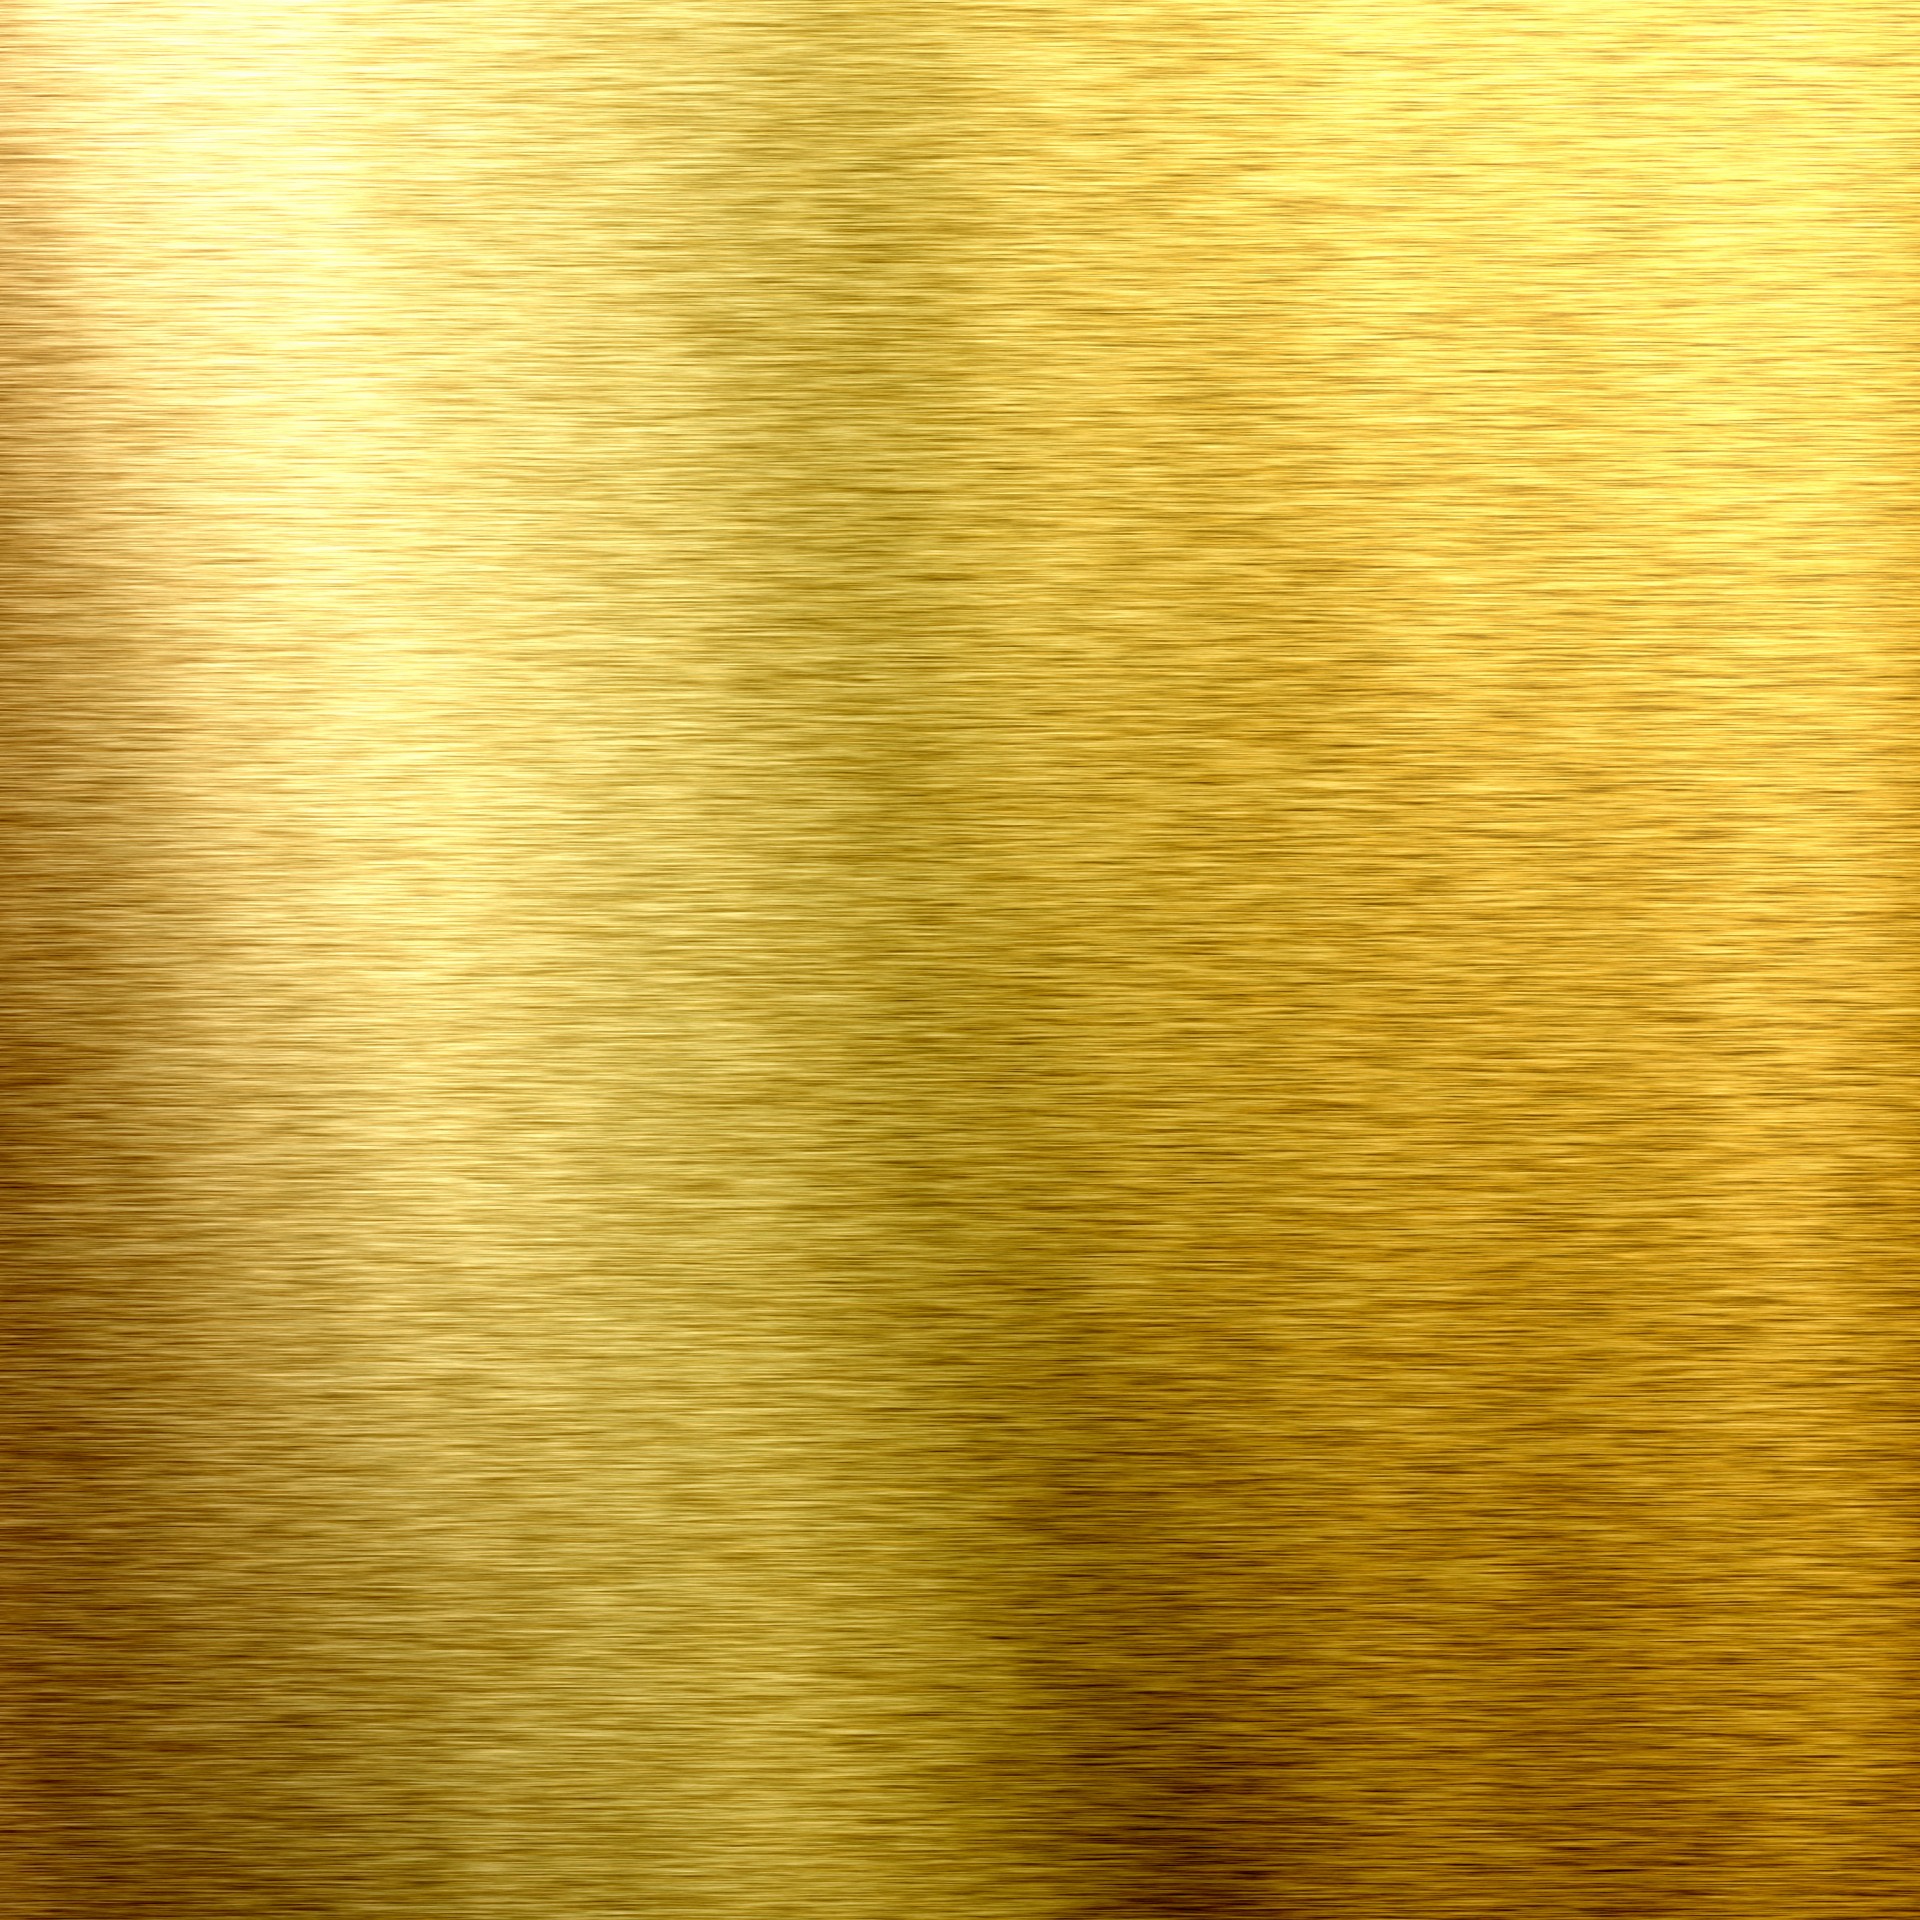 Gold Metallic Texture # 1 Free Stock Photo - Public Domain Pictures